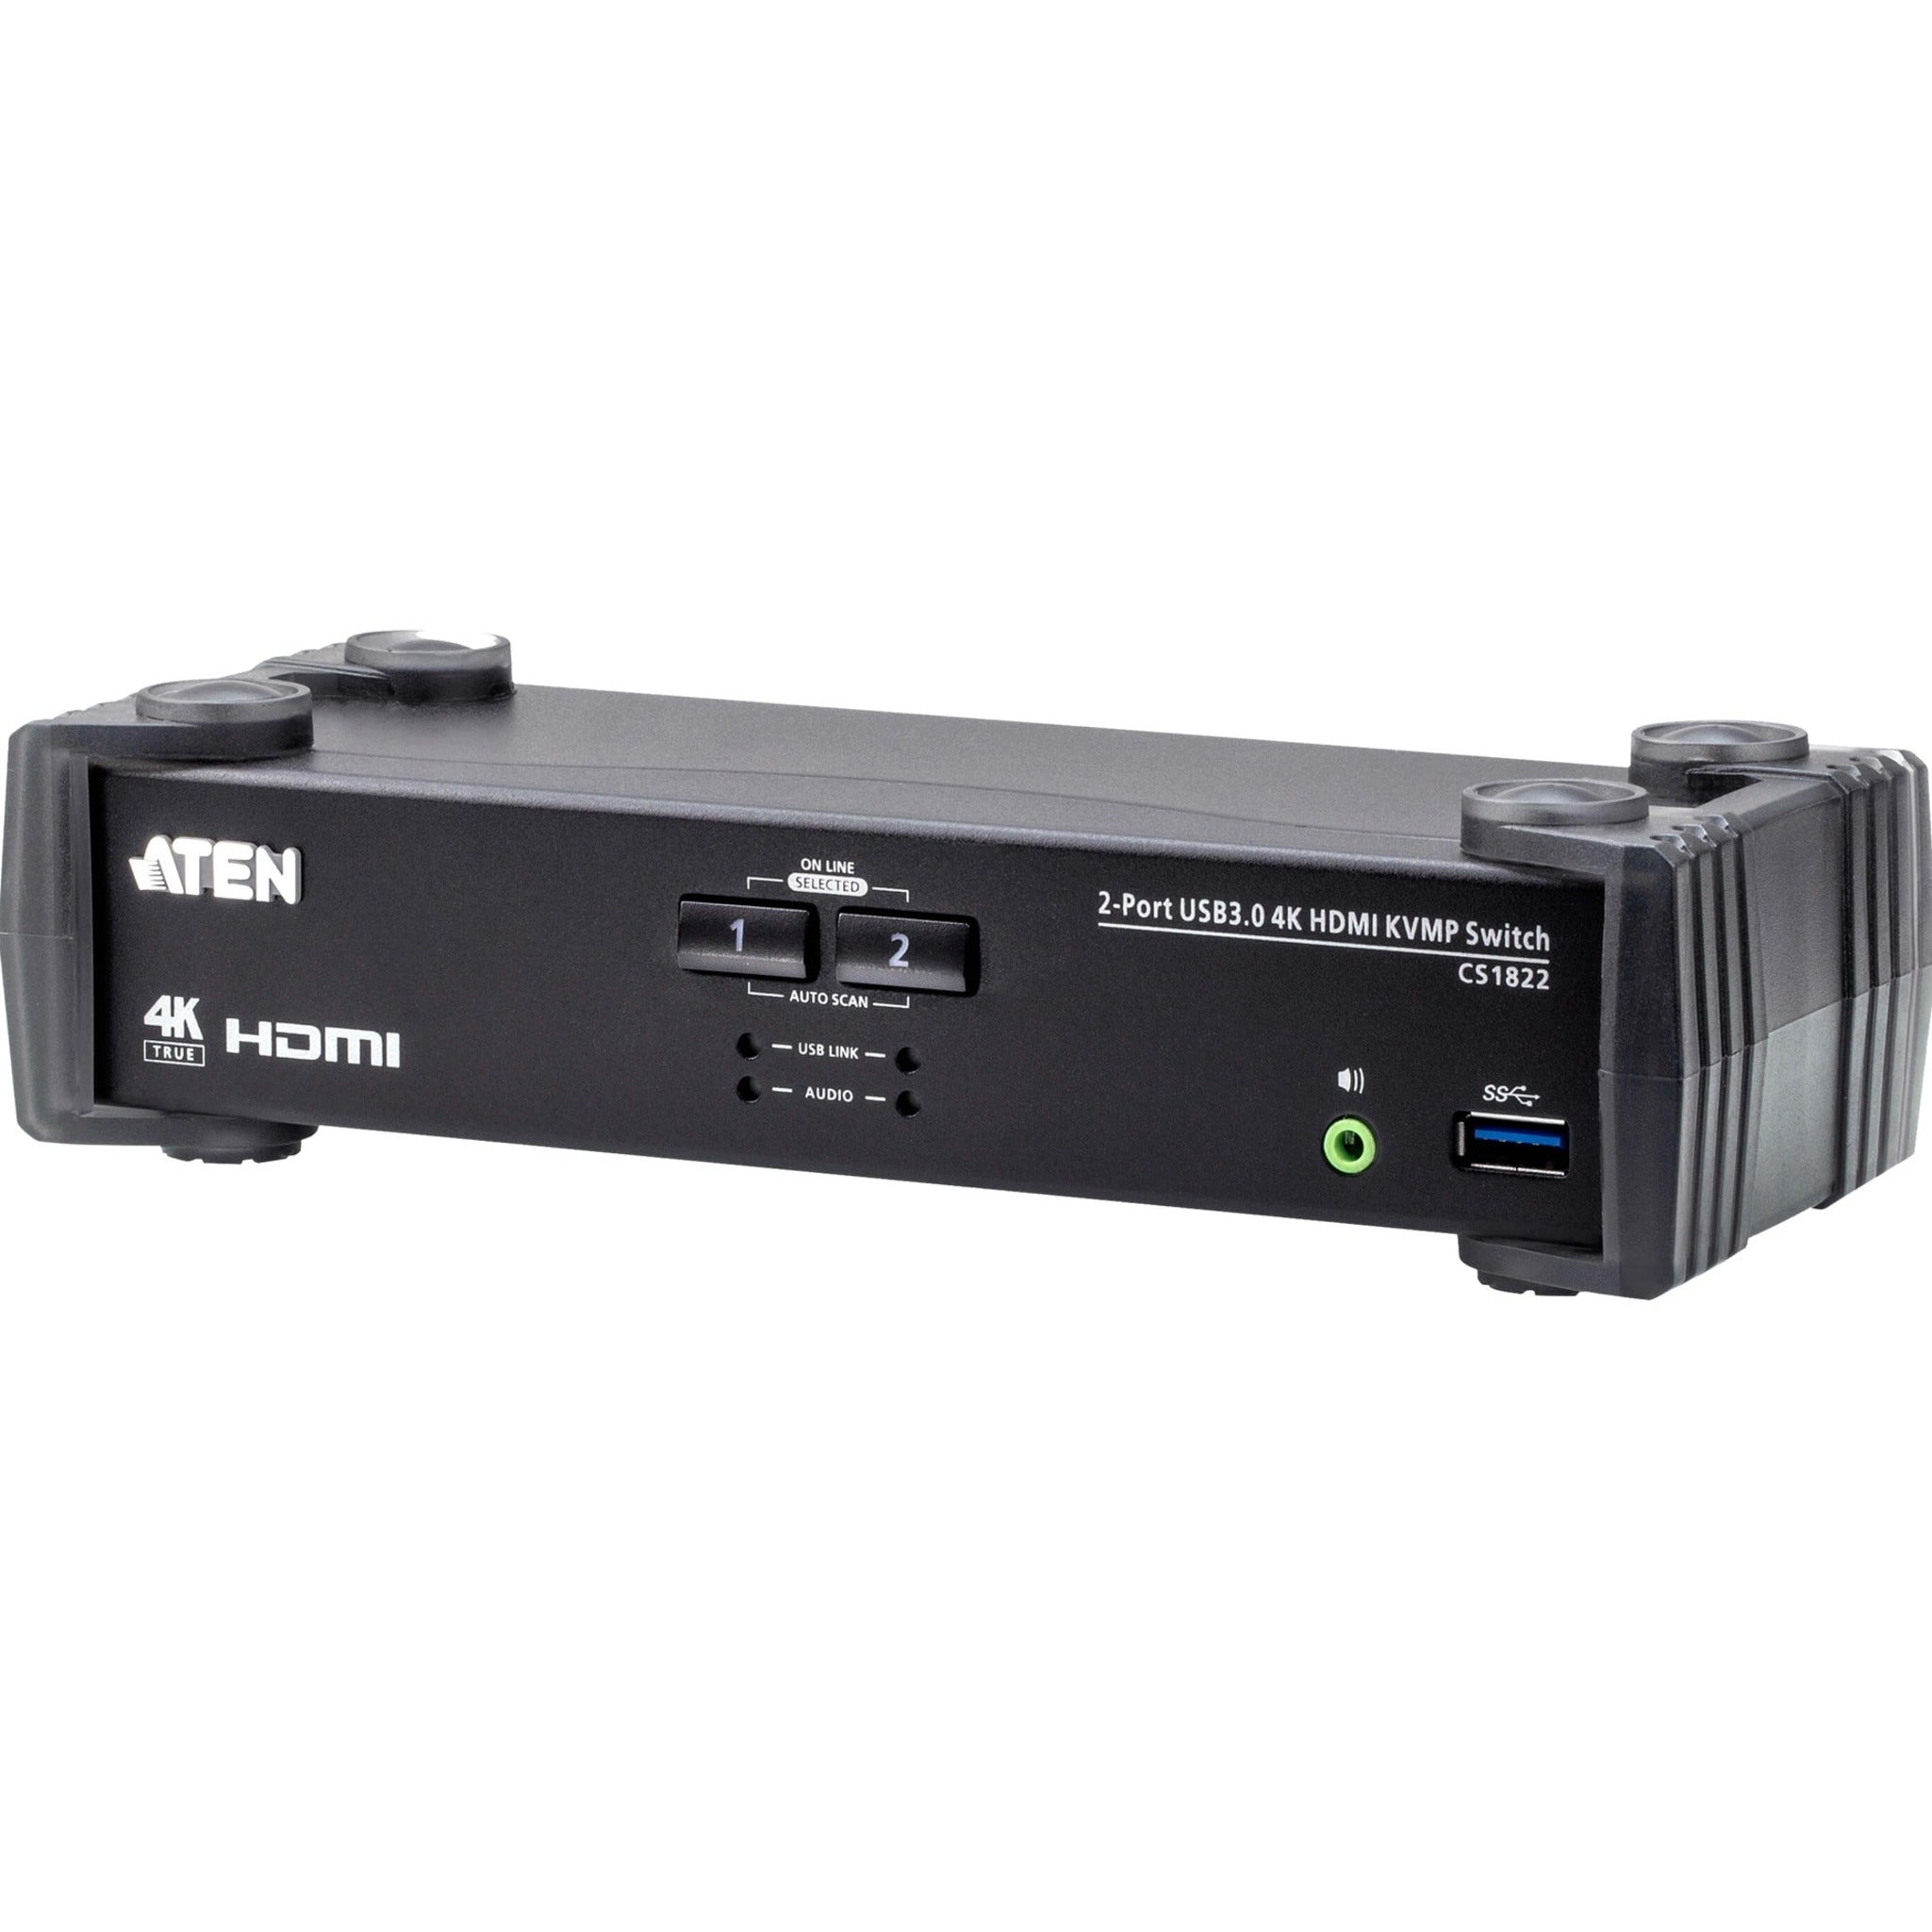 ATEN CS1822 2-Port USB 3.0 4K HDMI KVMP Switch，最大视频分辨率4096 x 2160 品牌名称: ATEN 翻译品牌名称: ATEN